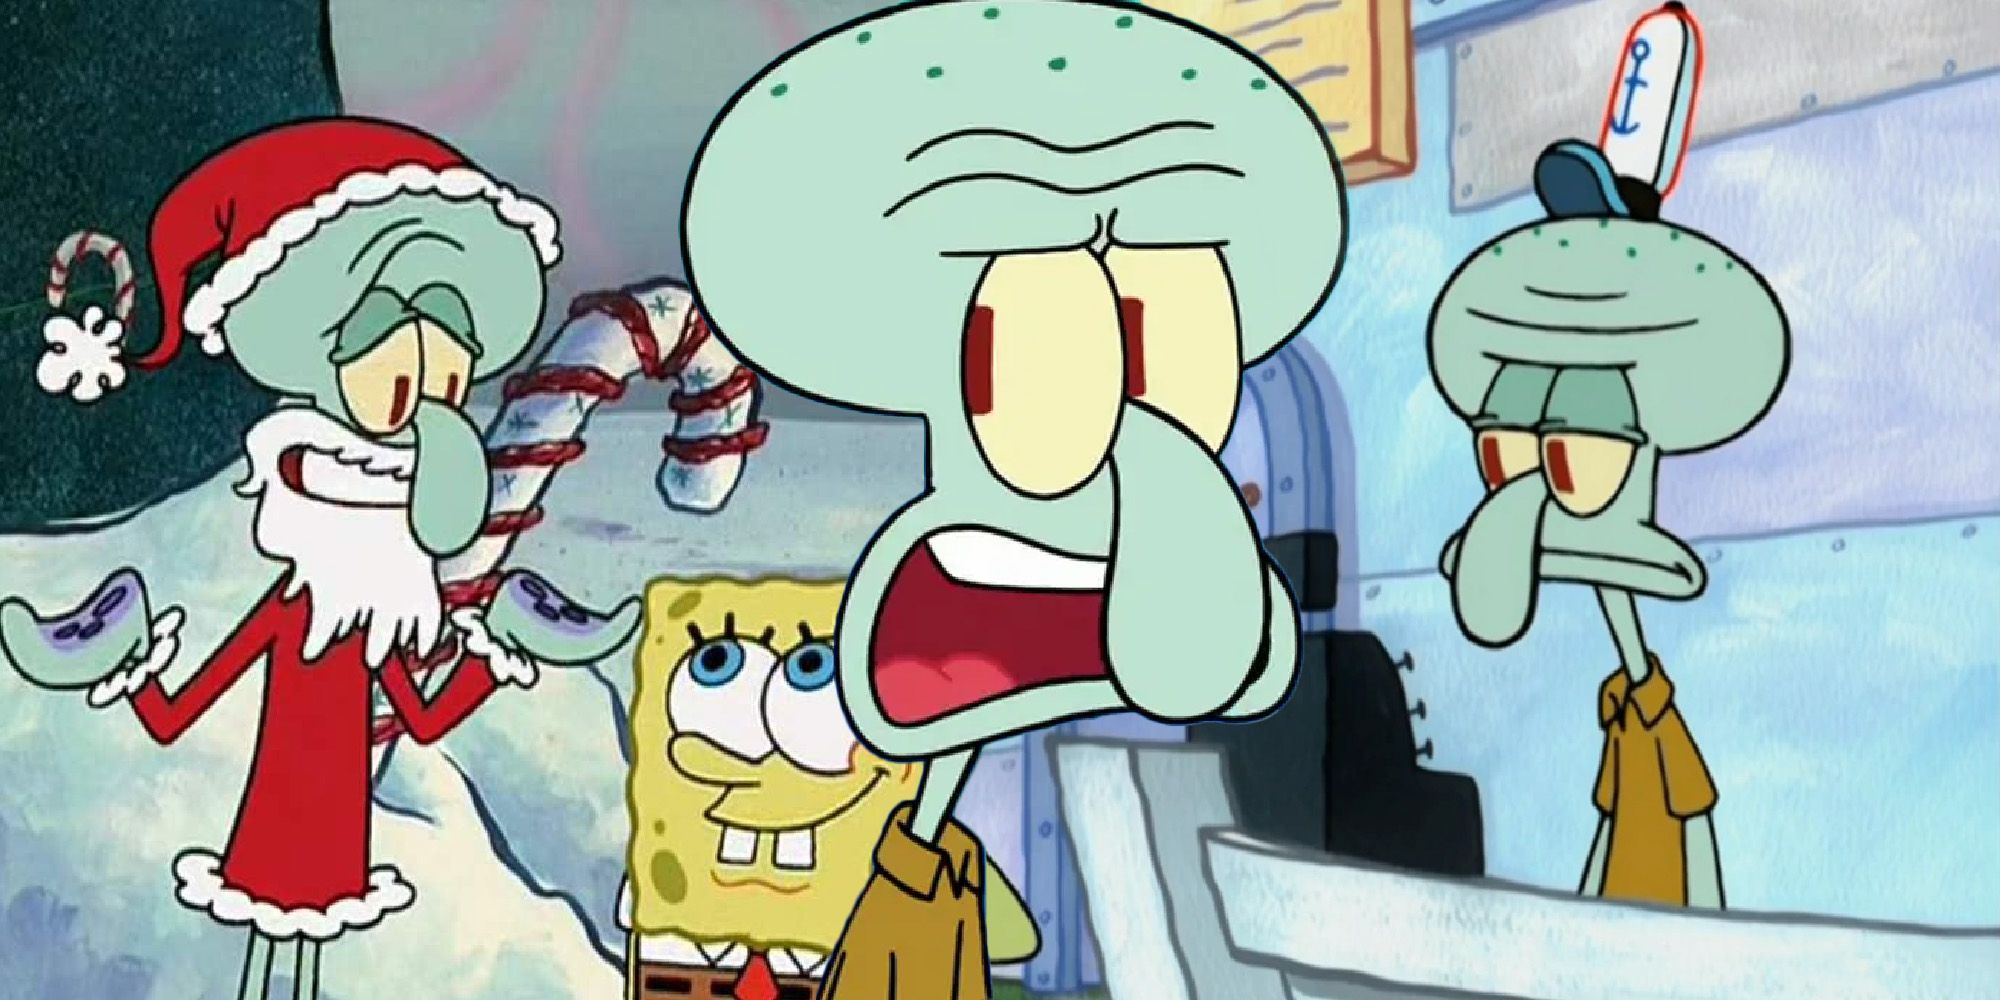 Squidward Spongebob Squarepants Jobs